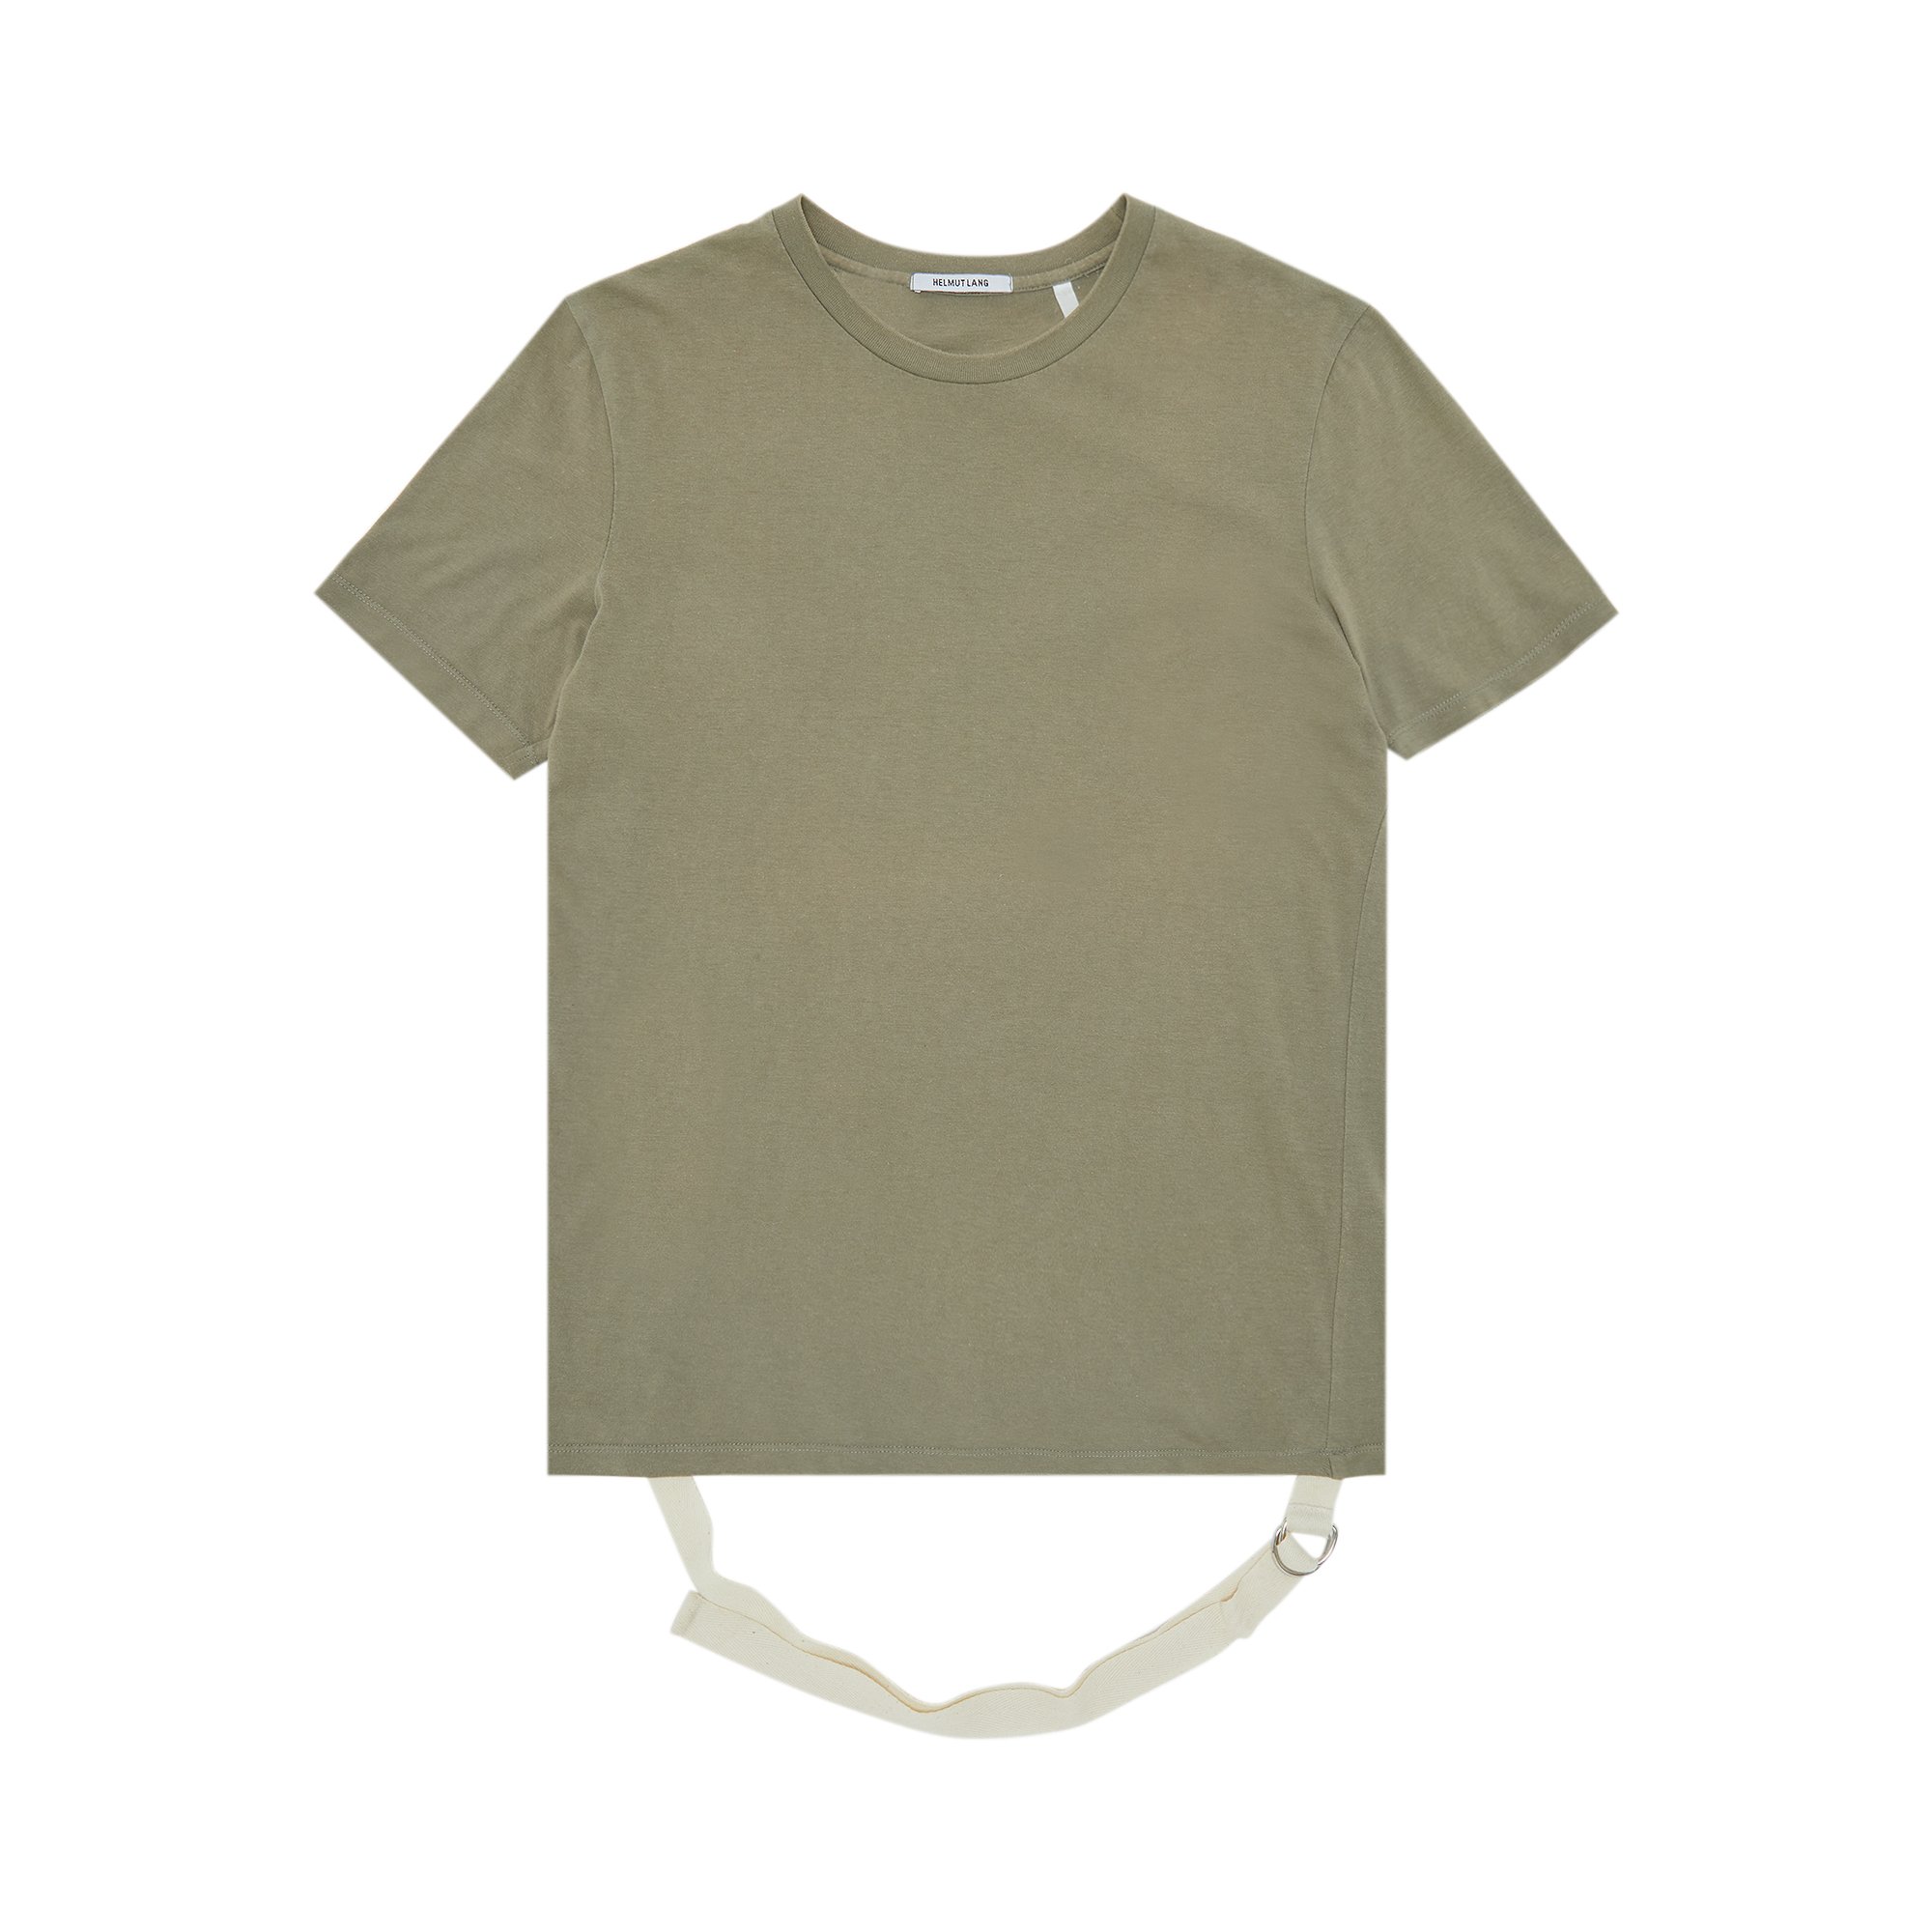 Buy Vintage Helmut Lang Bondage Strap T-Shirt 'Olive/White' - 0600 